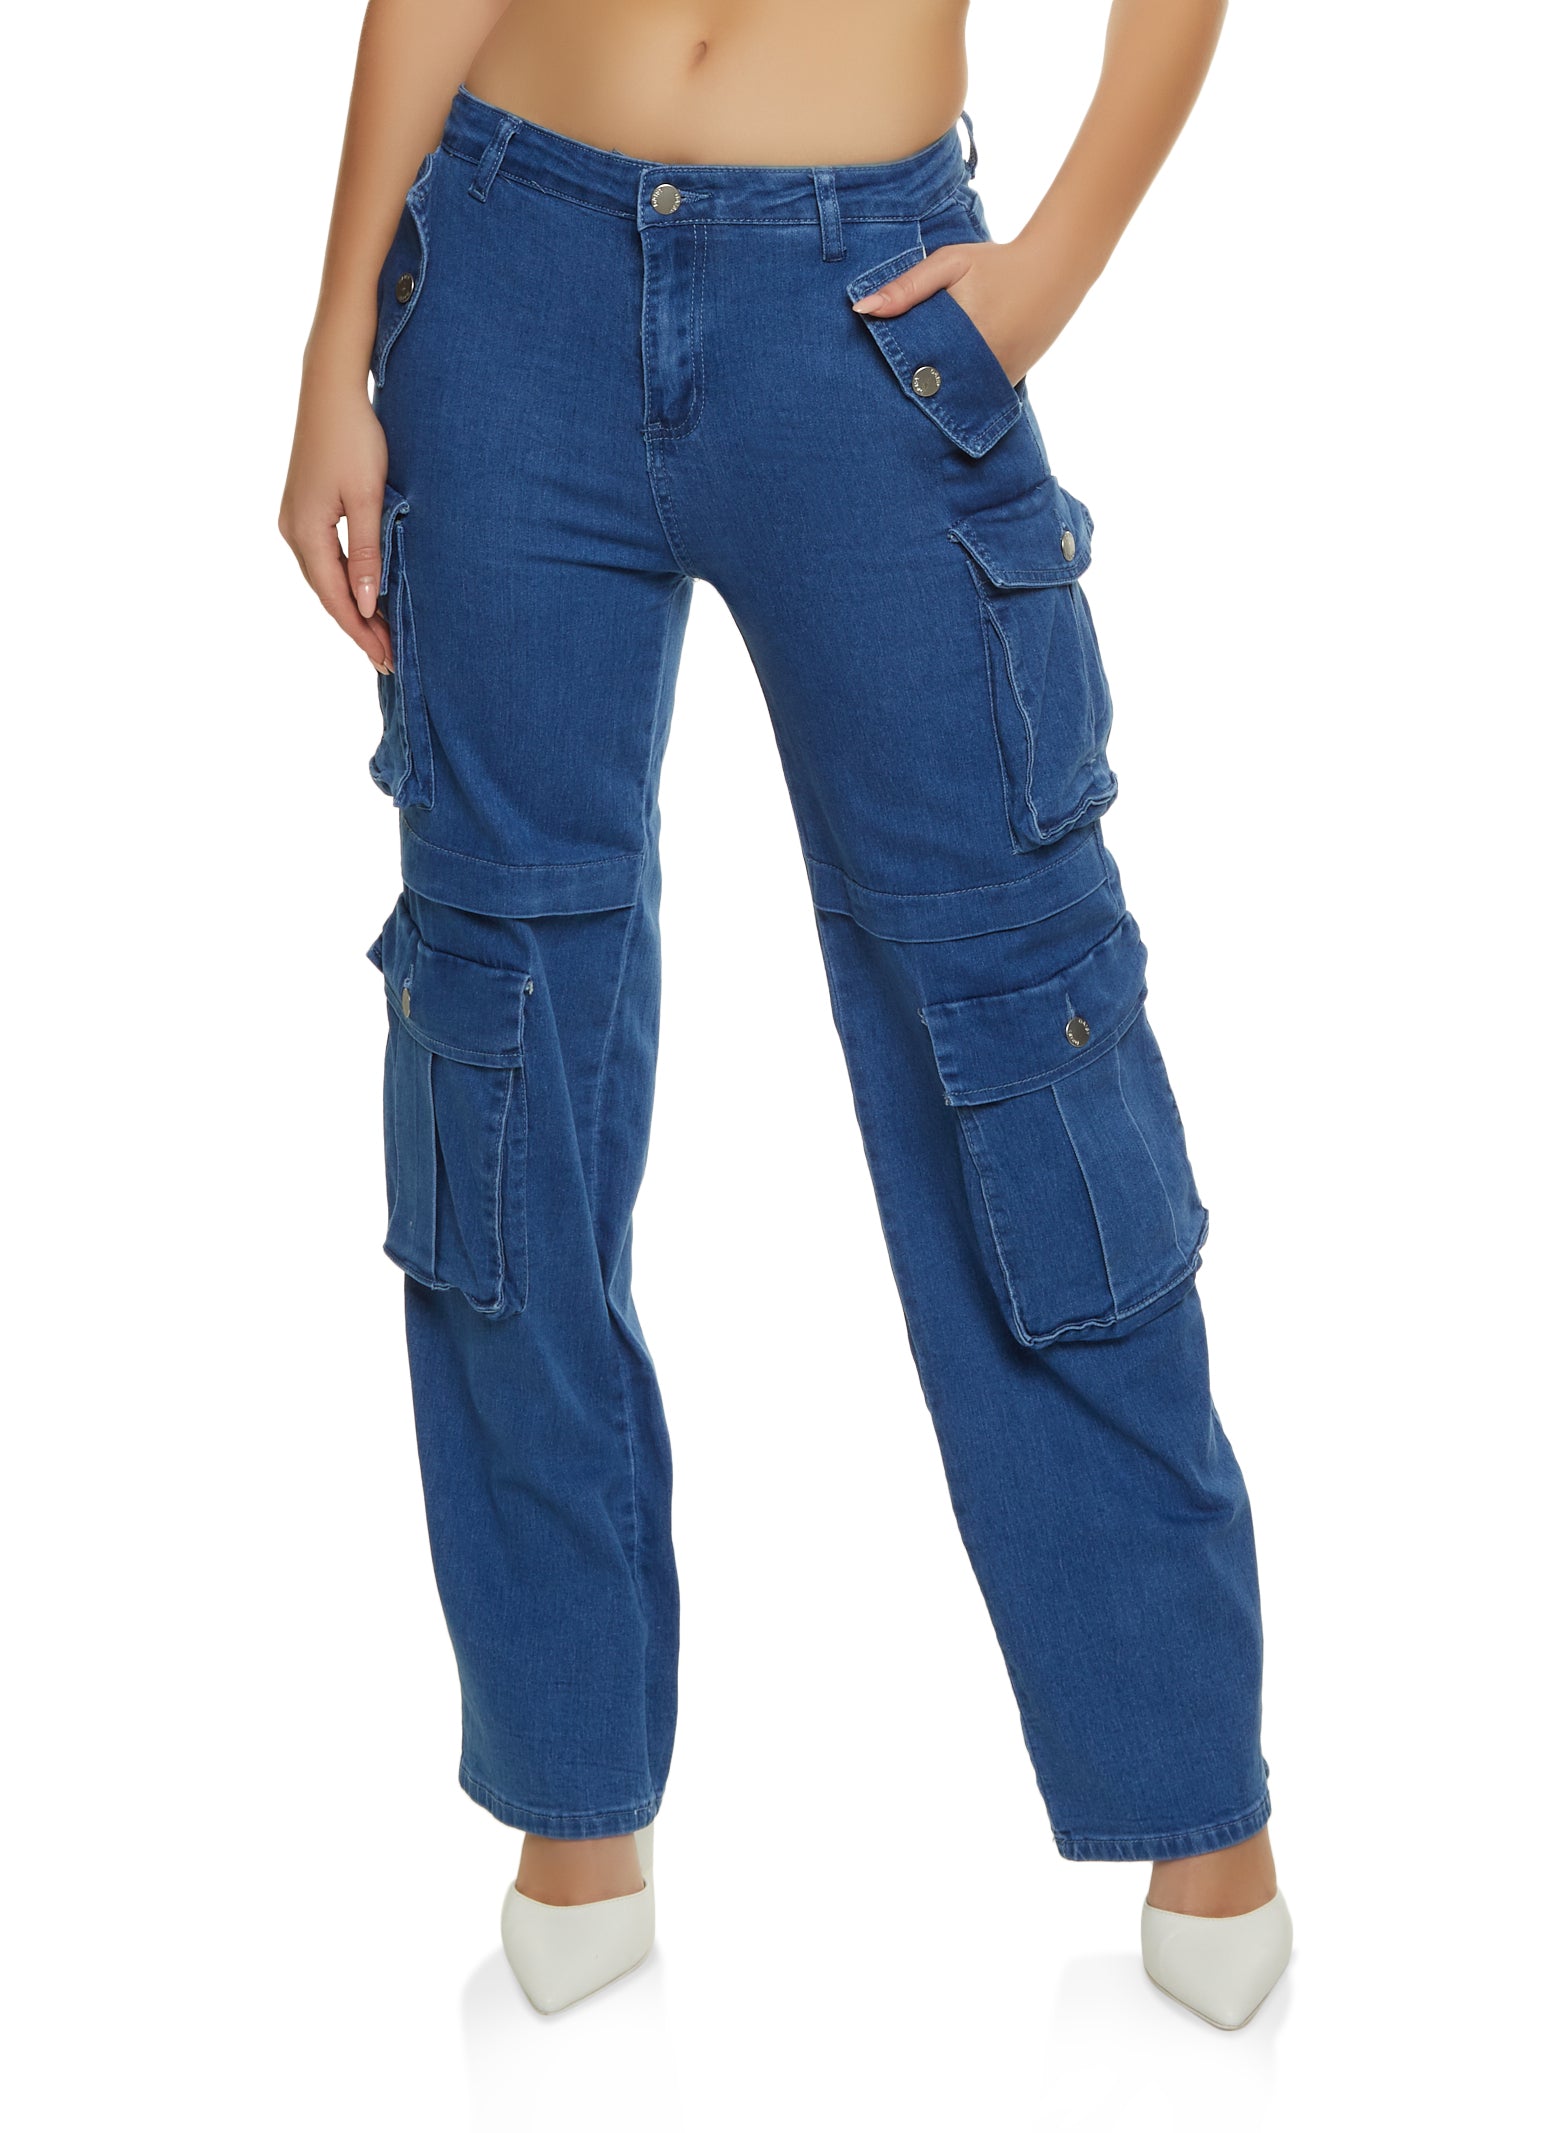 Women Stretch Pants Solid Color Mid-calf Length Flap Pockets